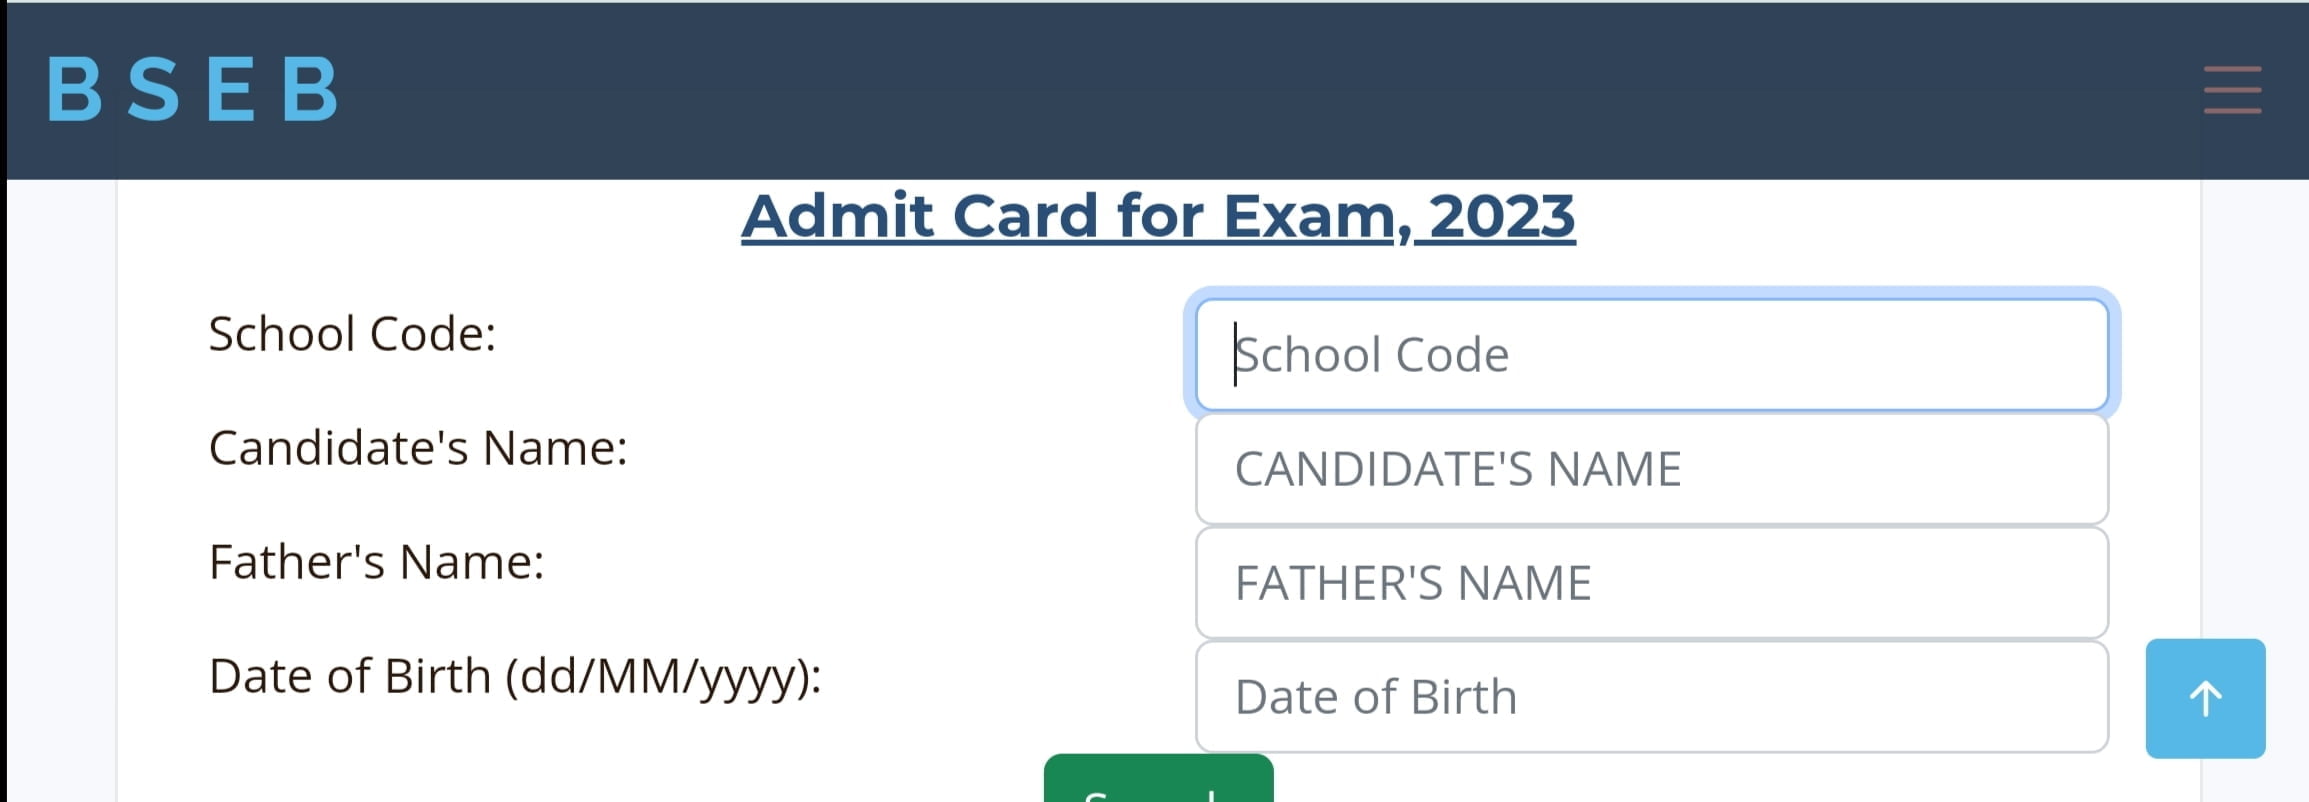 Bihar Board Exam Admit Card 2023